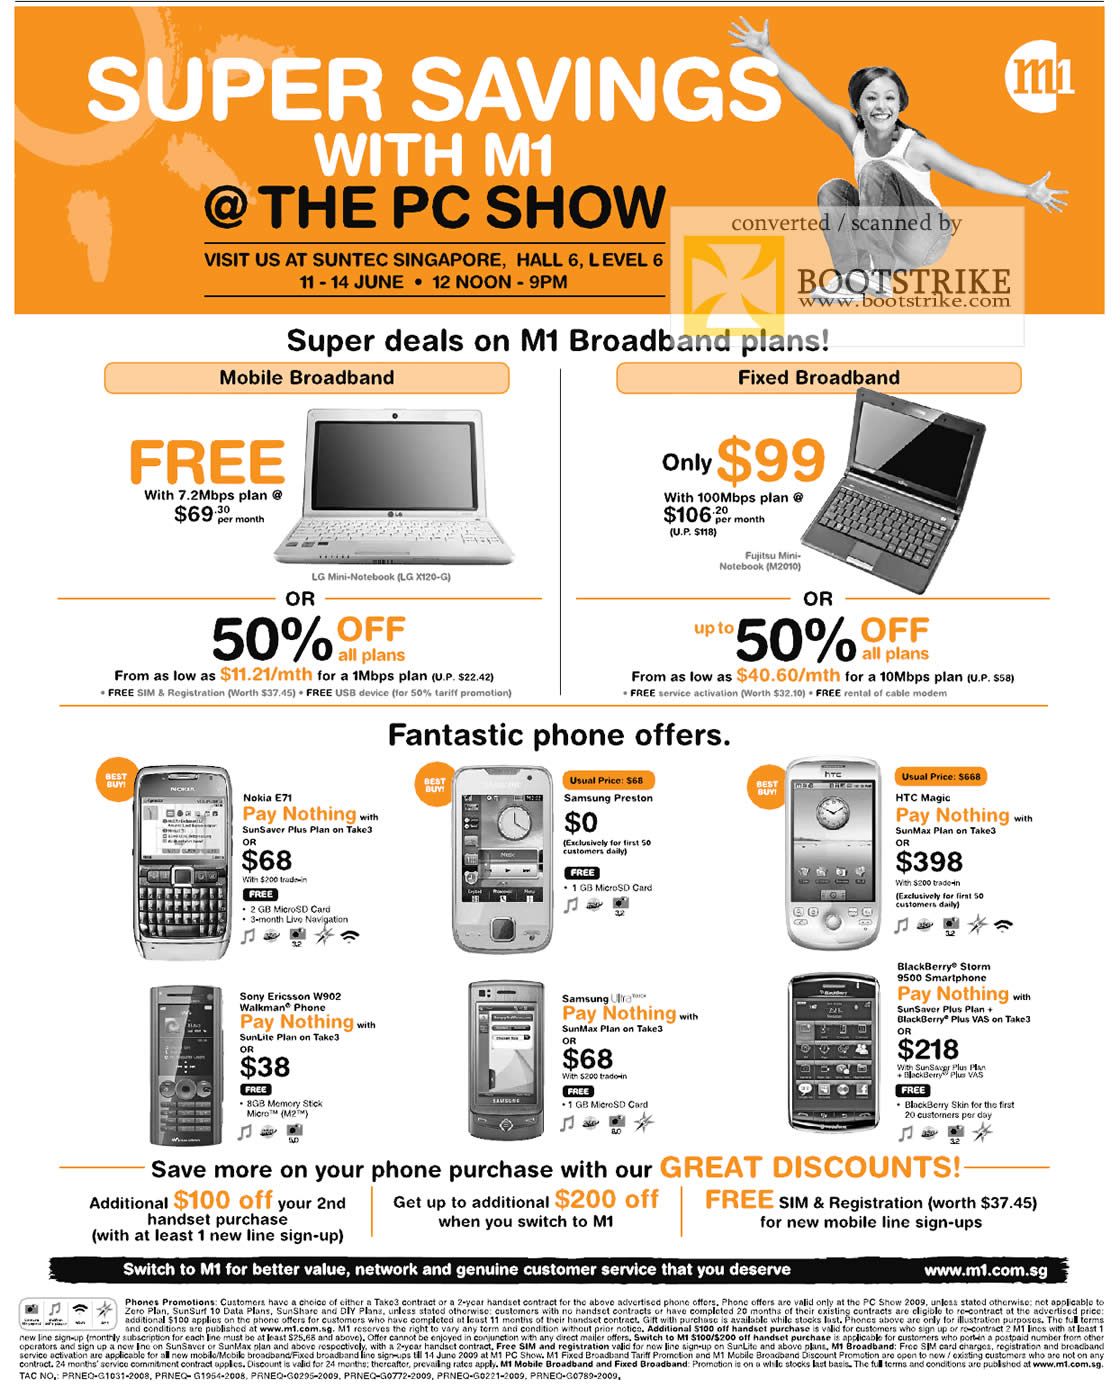 PC Show 2009 price list image brochure of M1 Phone Fixed Mobile Broadband Nokia Samsung HTC Blackberry Sony